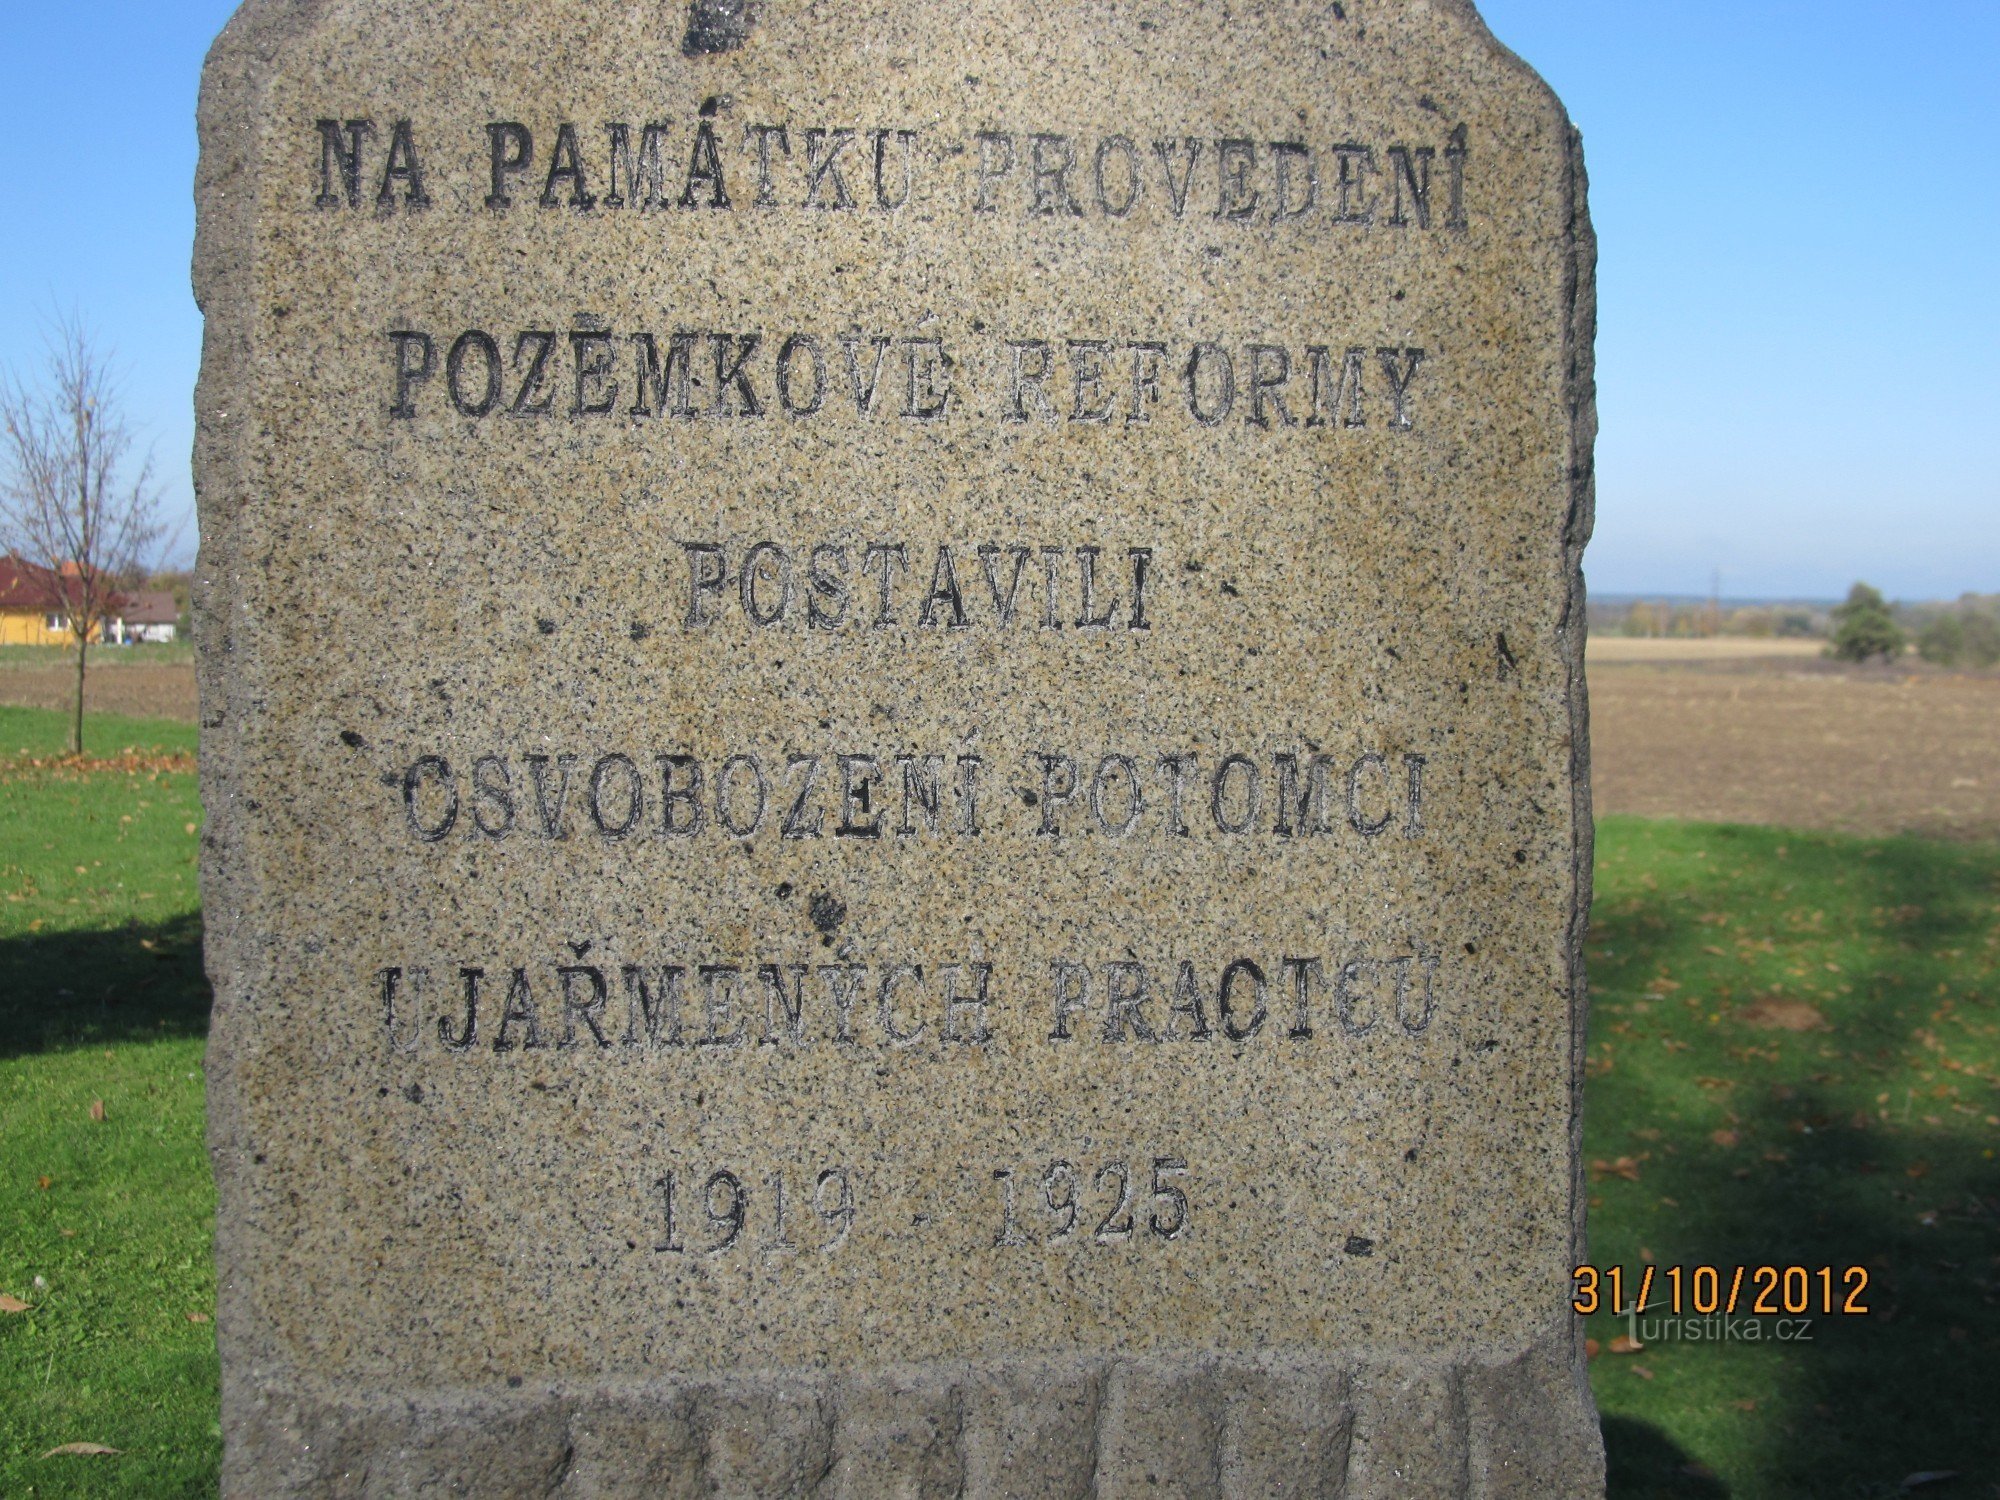 Spomenik zemljišnoj reformi 1919-1938 u Hlízovu ispred groblja - natpis na spomeniku